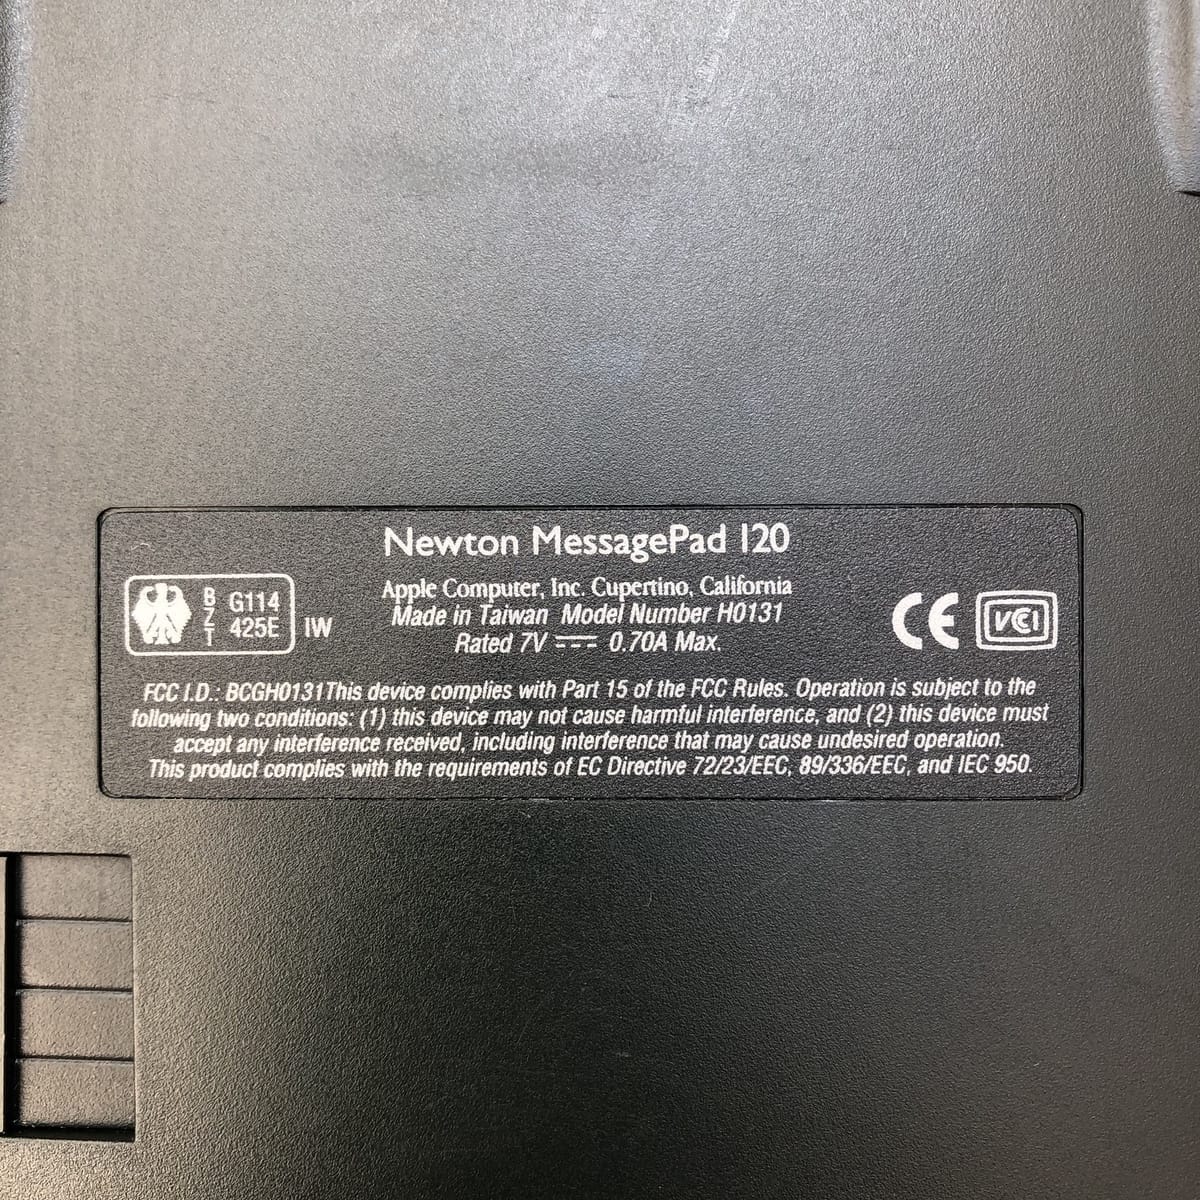 MessagePad 120 OS1 - Newtonhonk